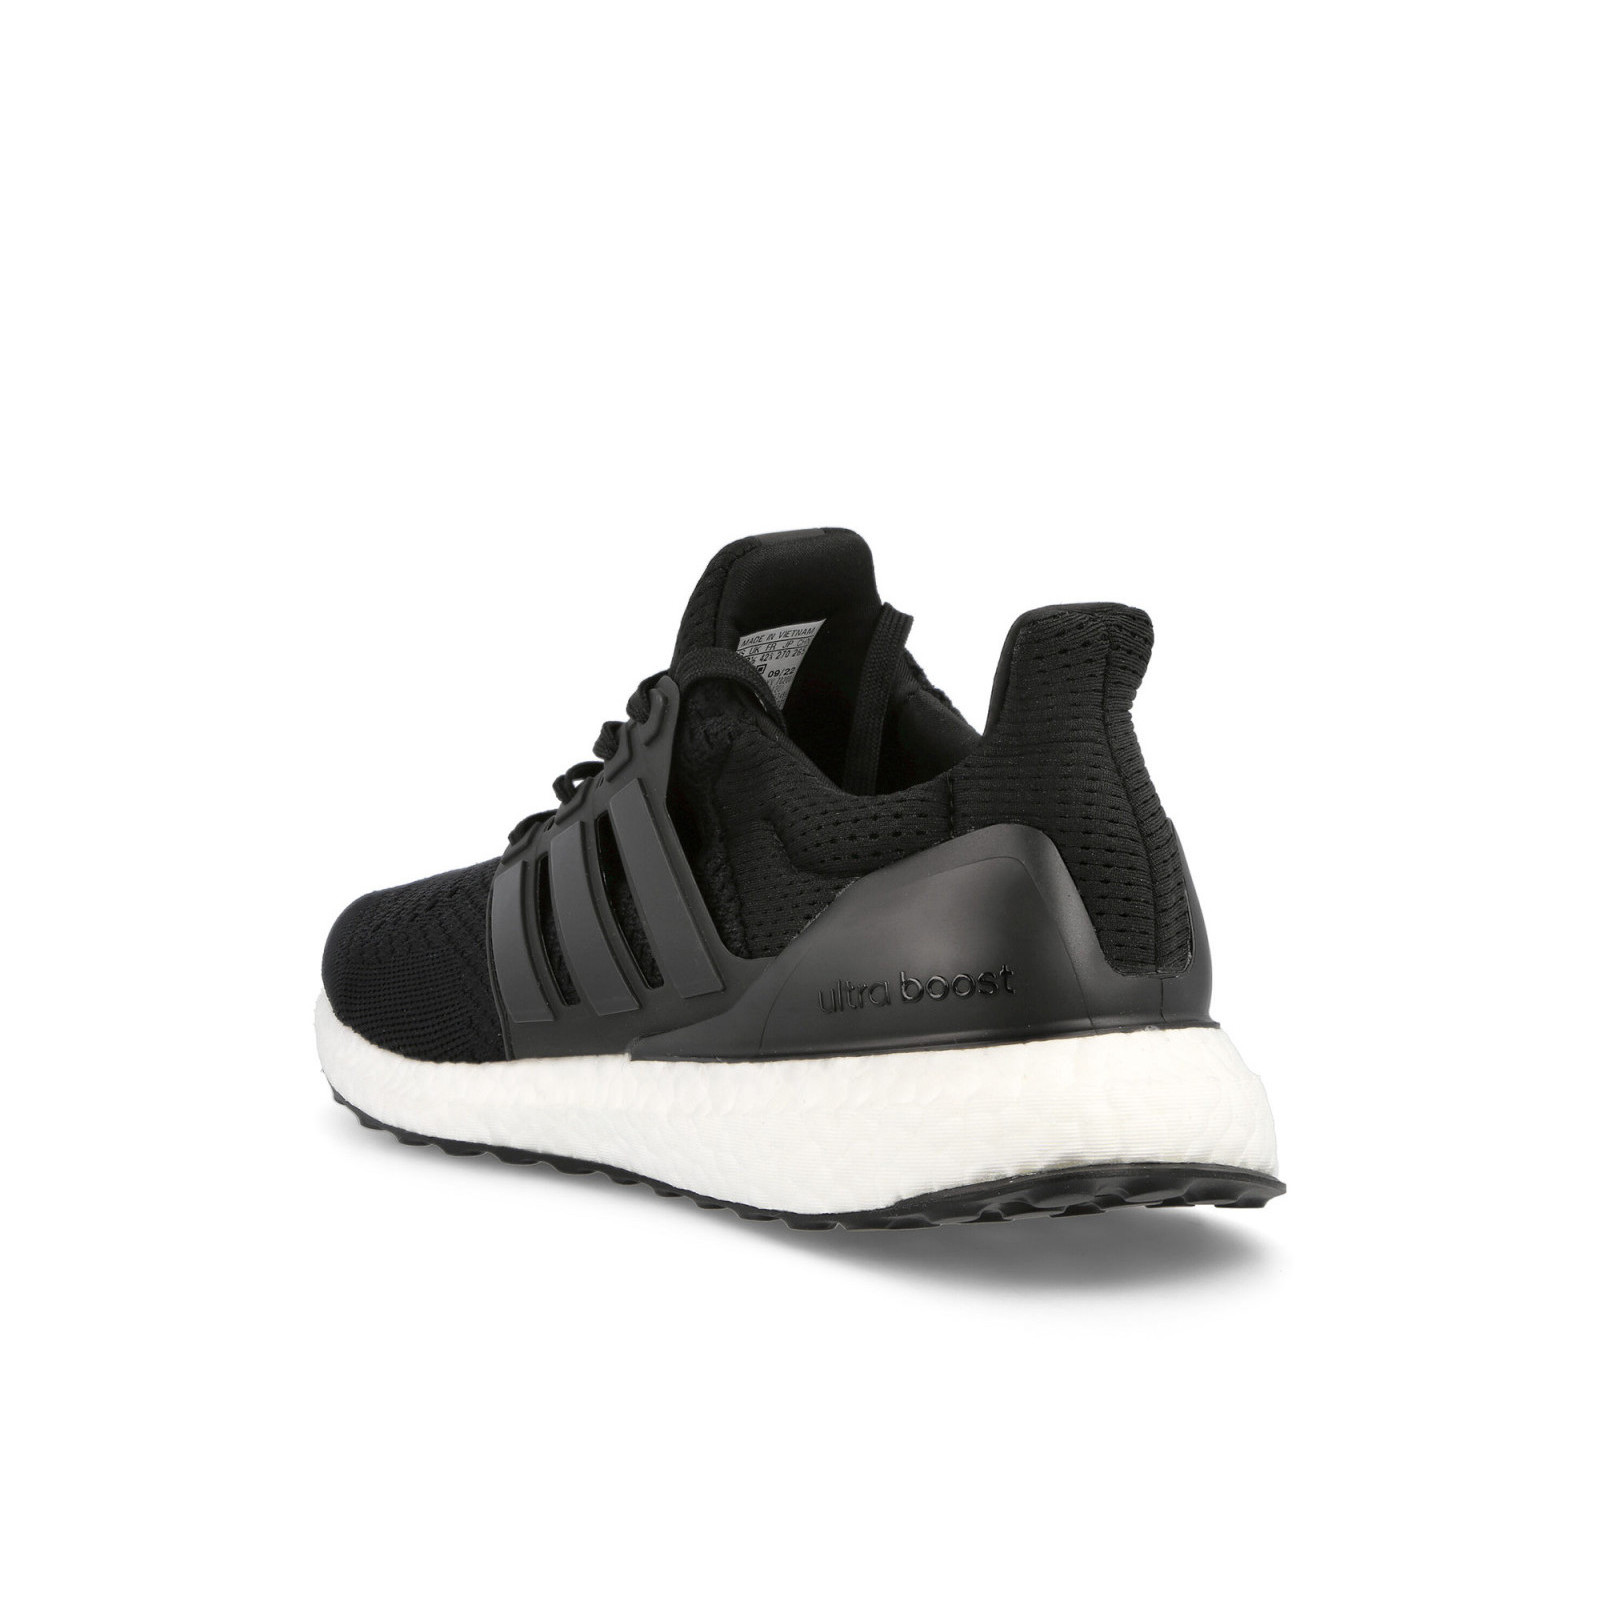 Adidas UltraBOOST 1.0
Black / White